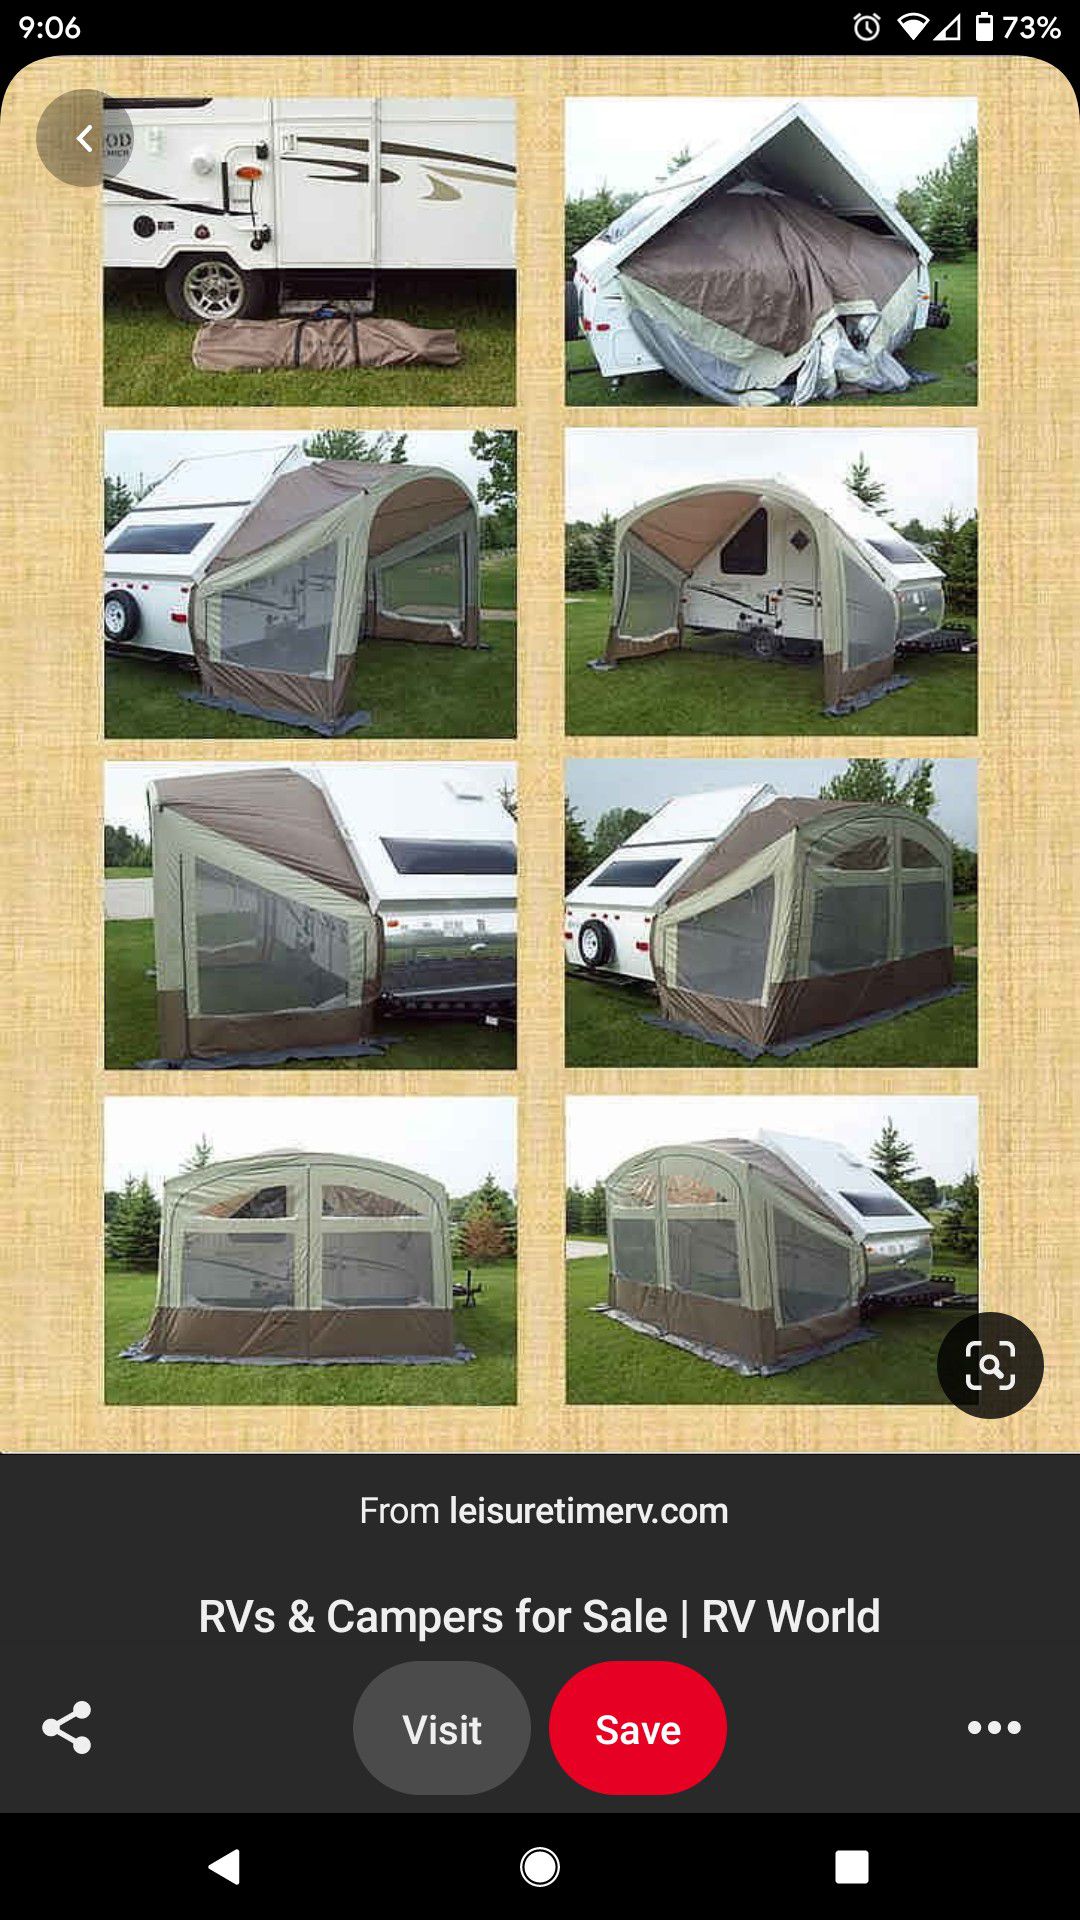 Tent extension for ALiner/Hard side popup trailer